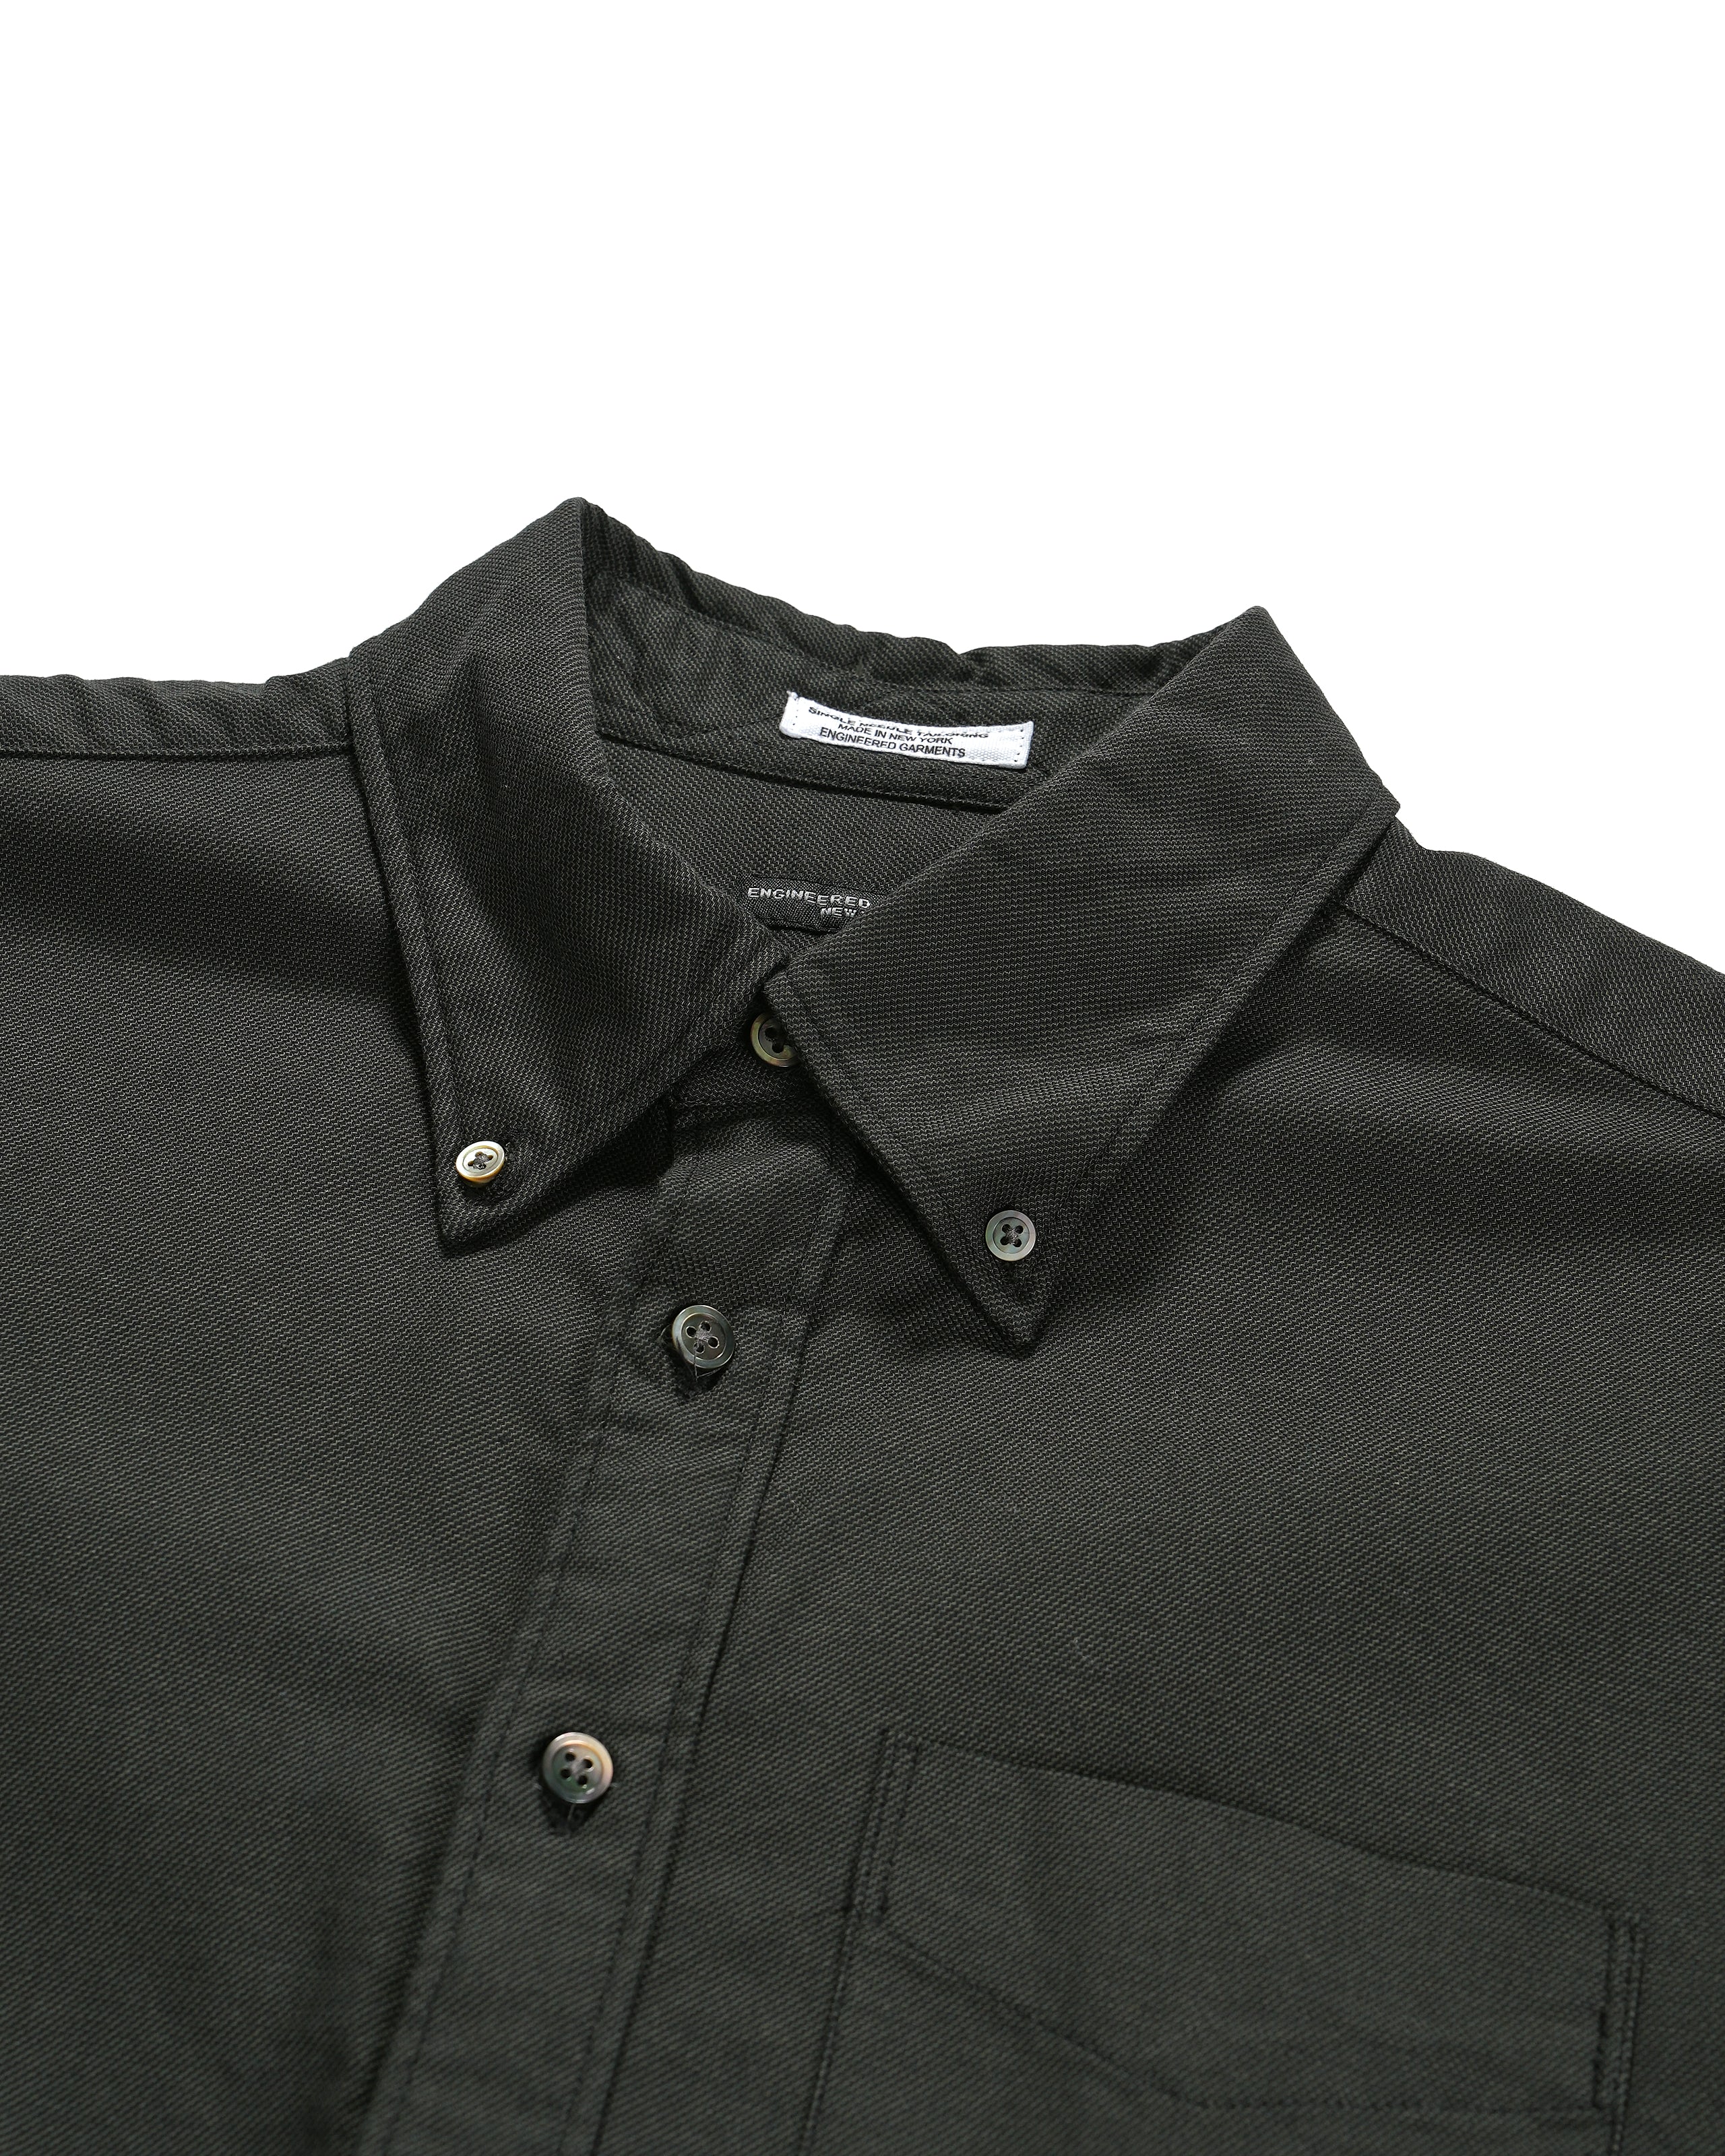 19 Century BD Shirt - Charcoal Cotton Oxford Twill